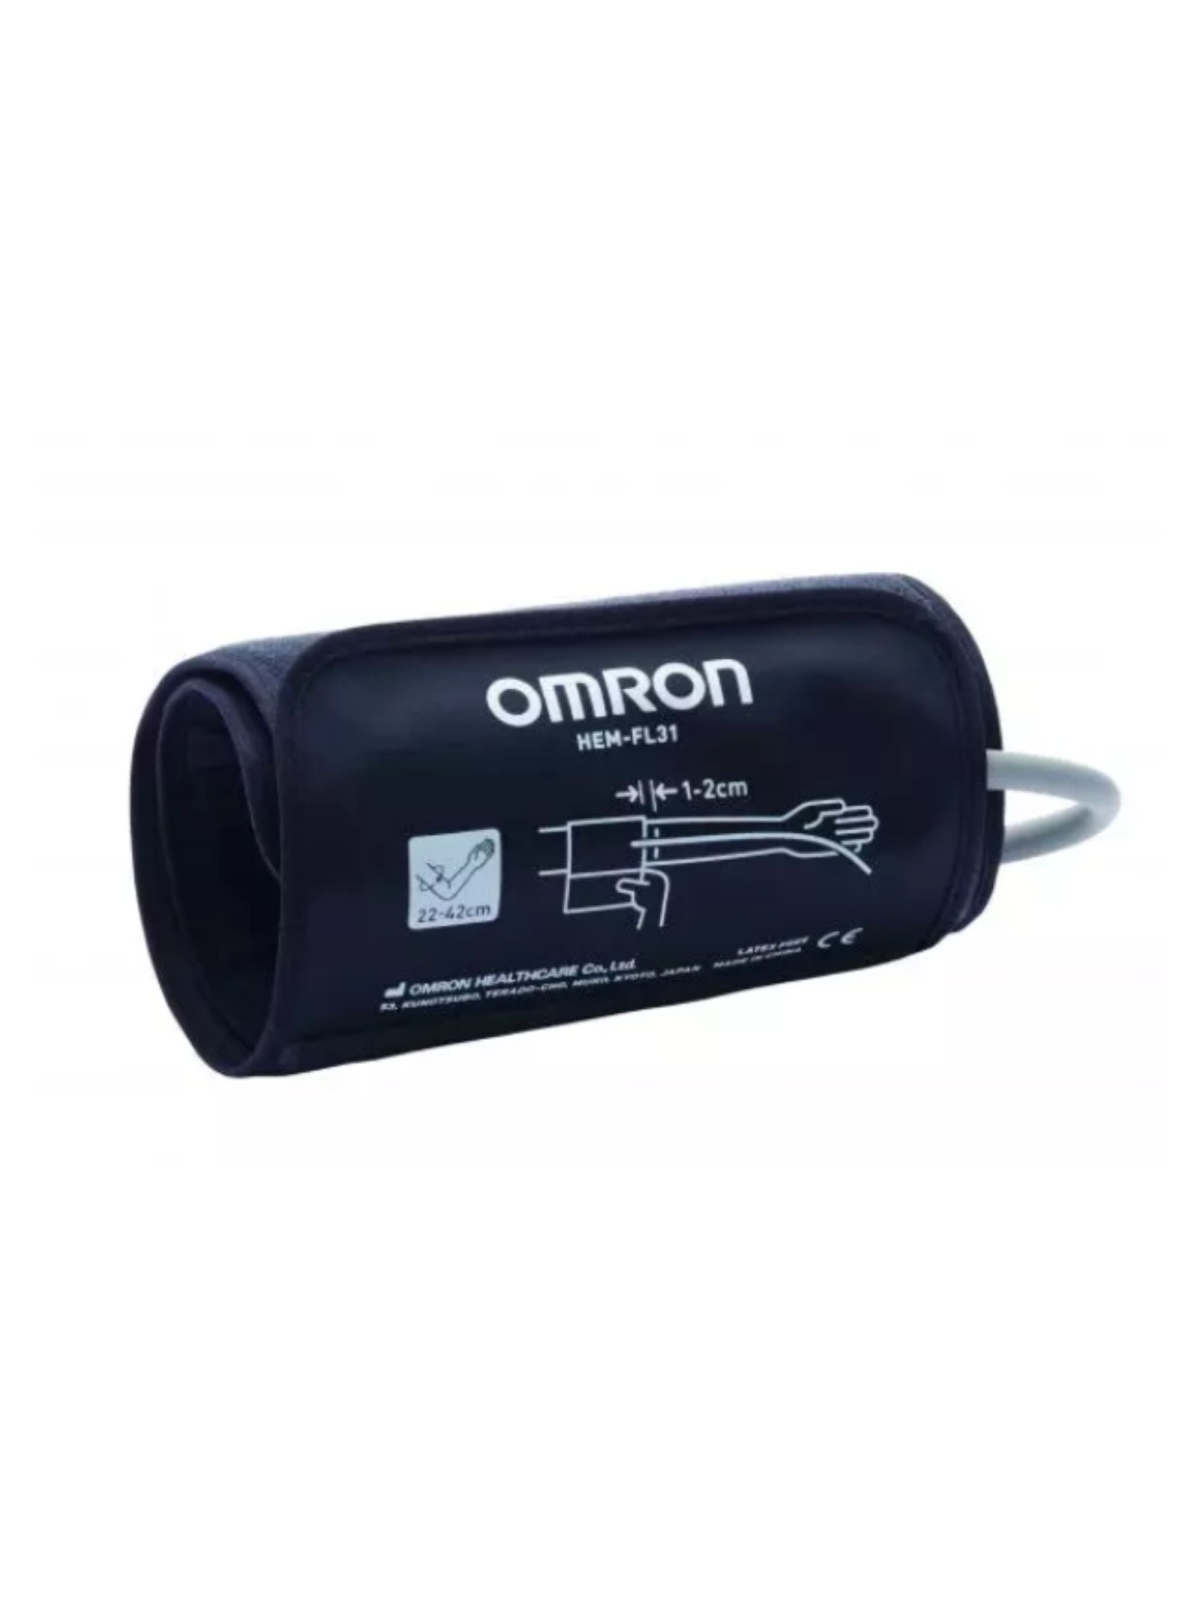 Tensiometro Digital Brazo Omron M3 Comfort - Comprar ahora.